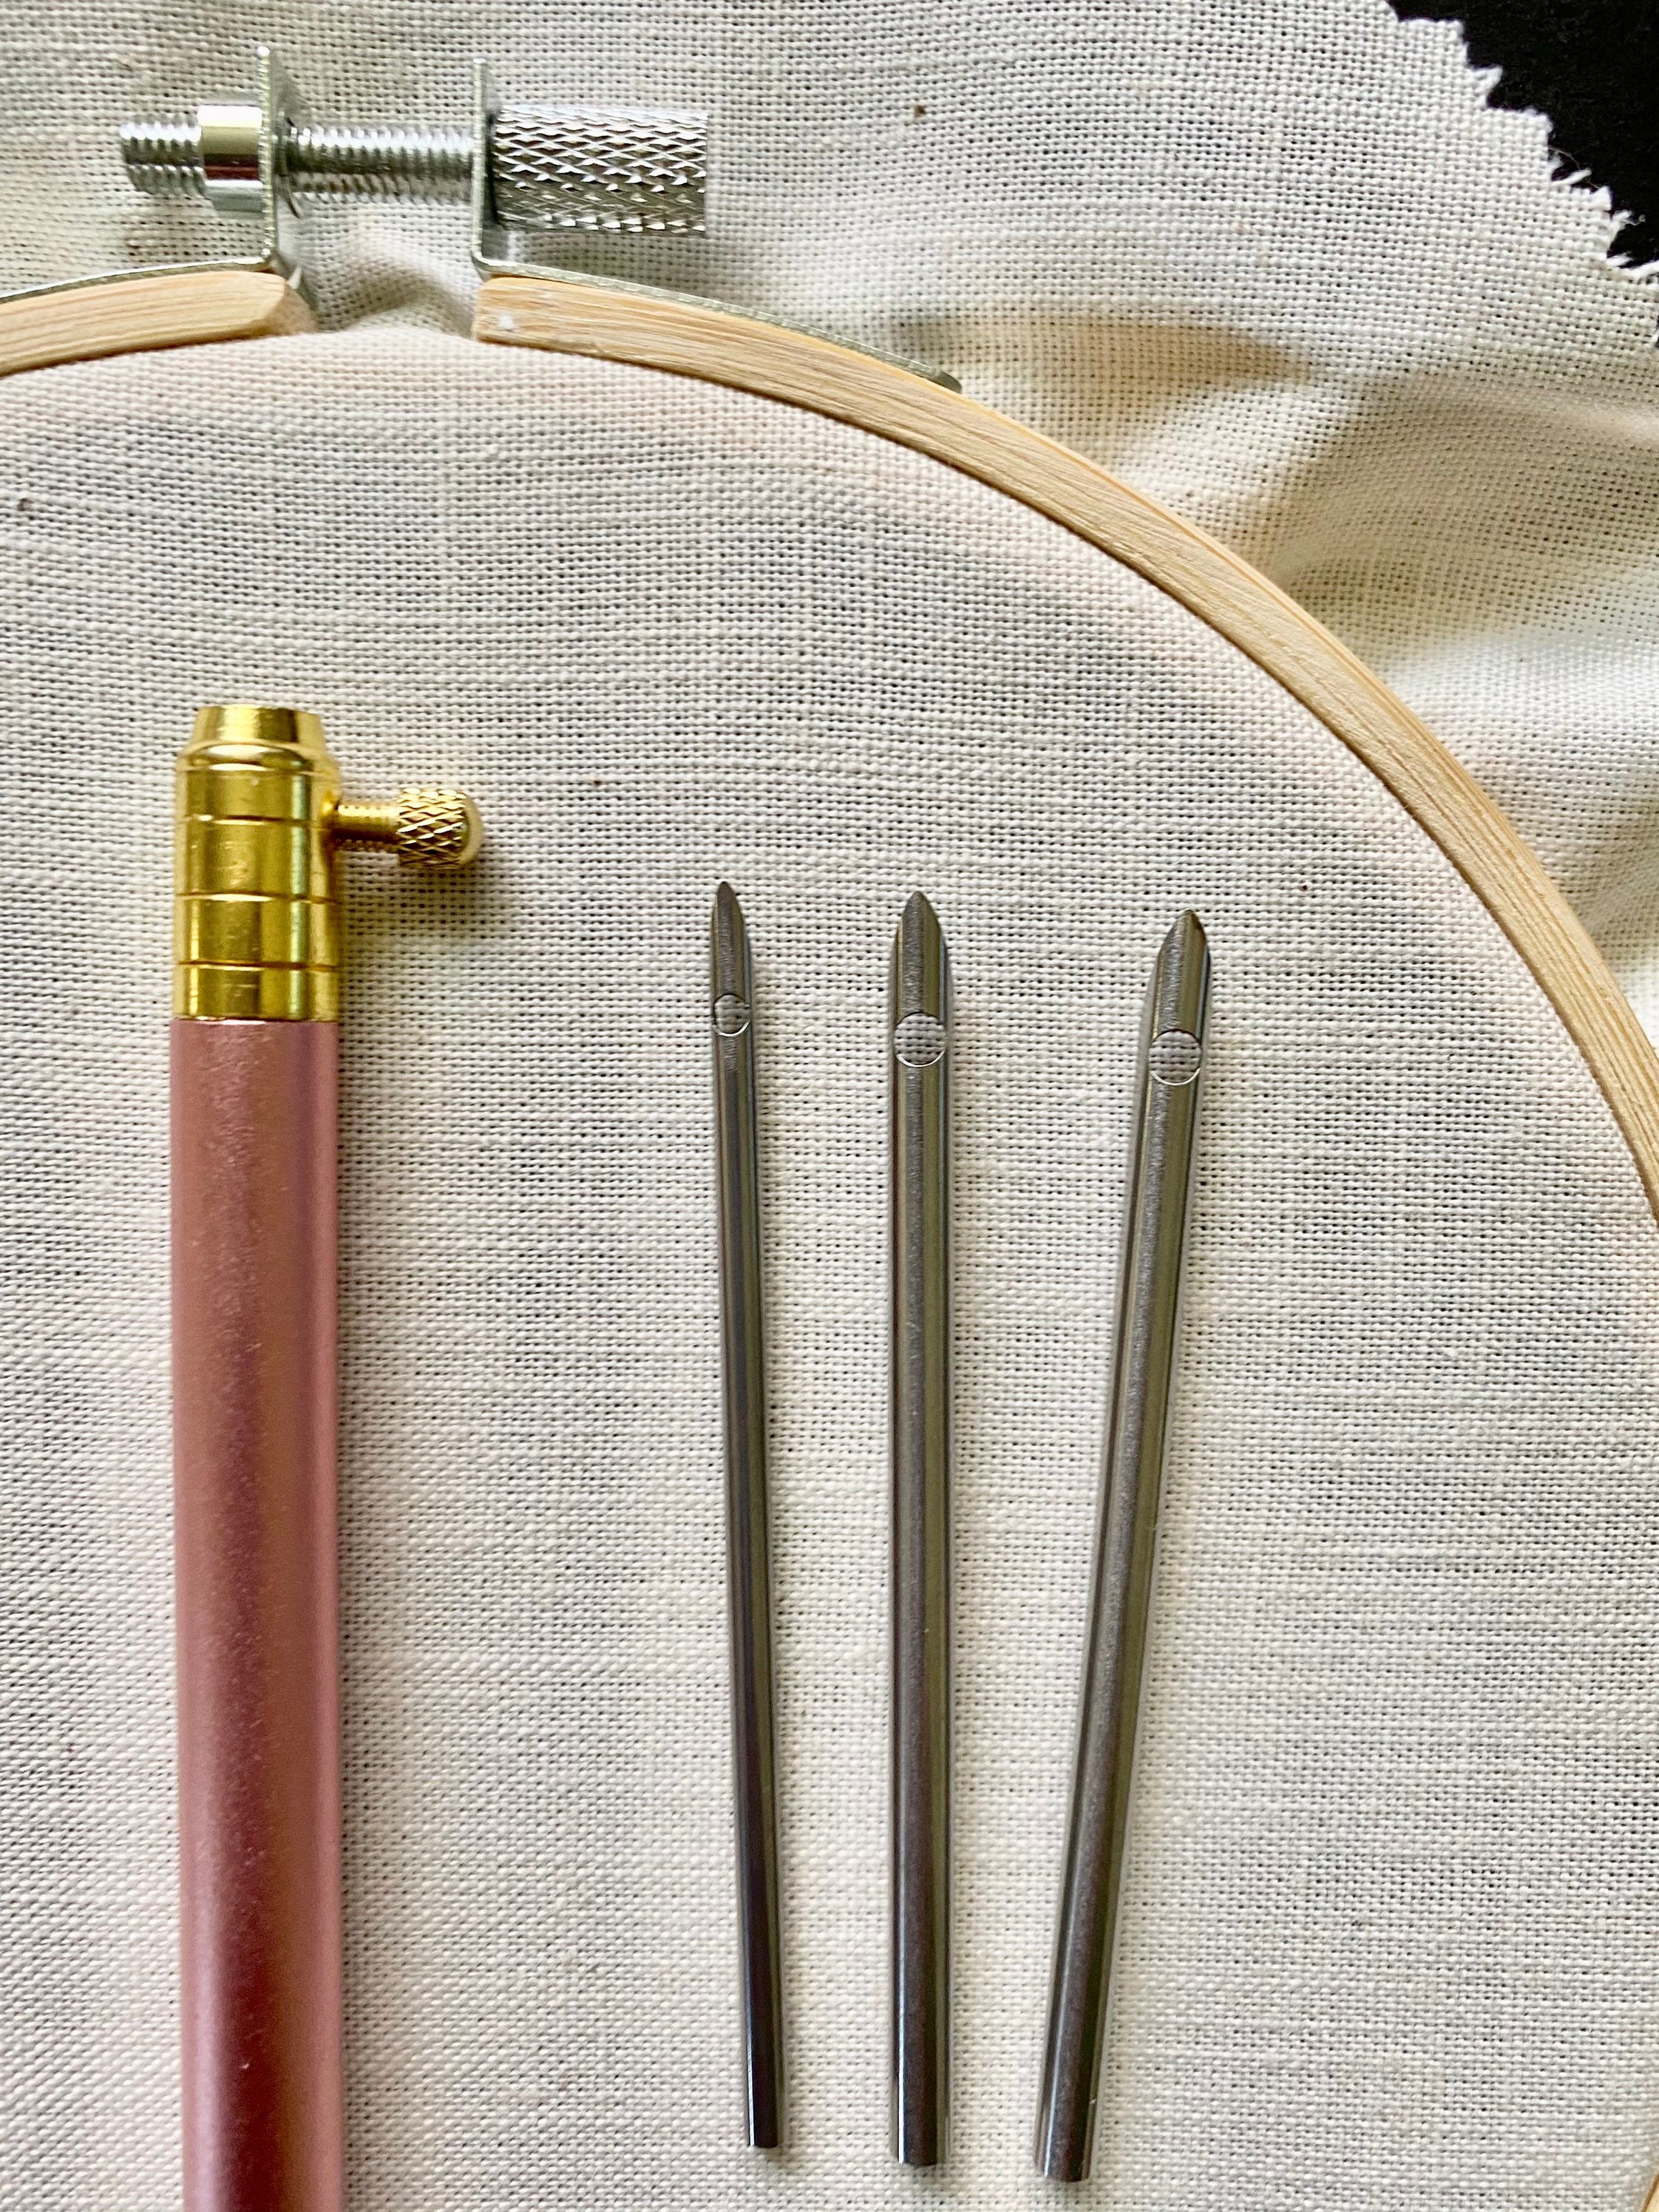 1 Set of Embroidery Stitching Punch Needle Handle Embroidery Punch Needles, Size: 0.8X1.2X10.5CM